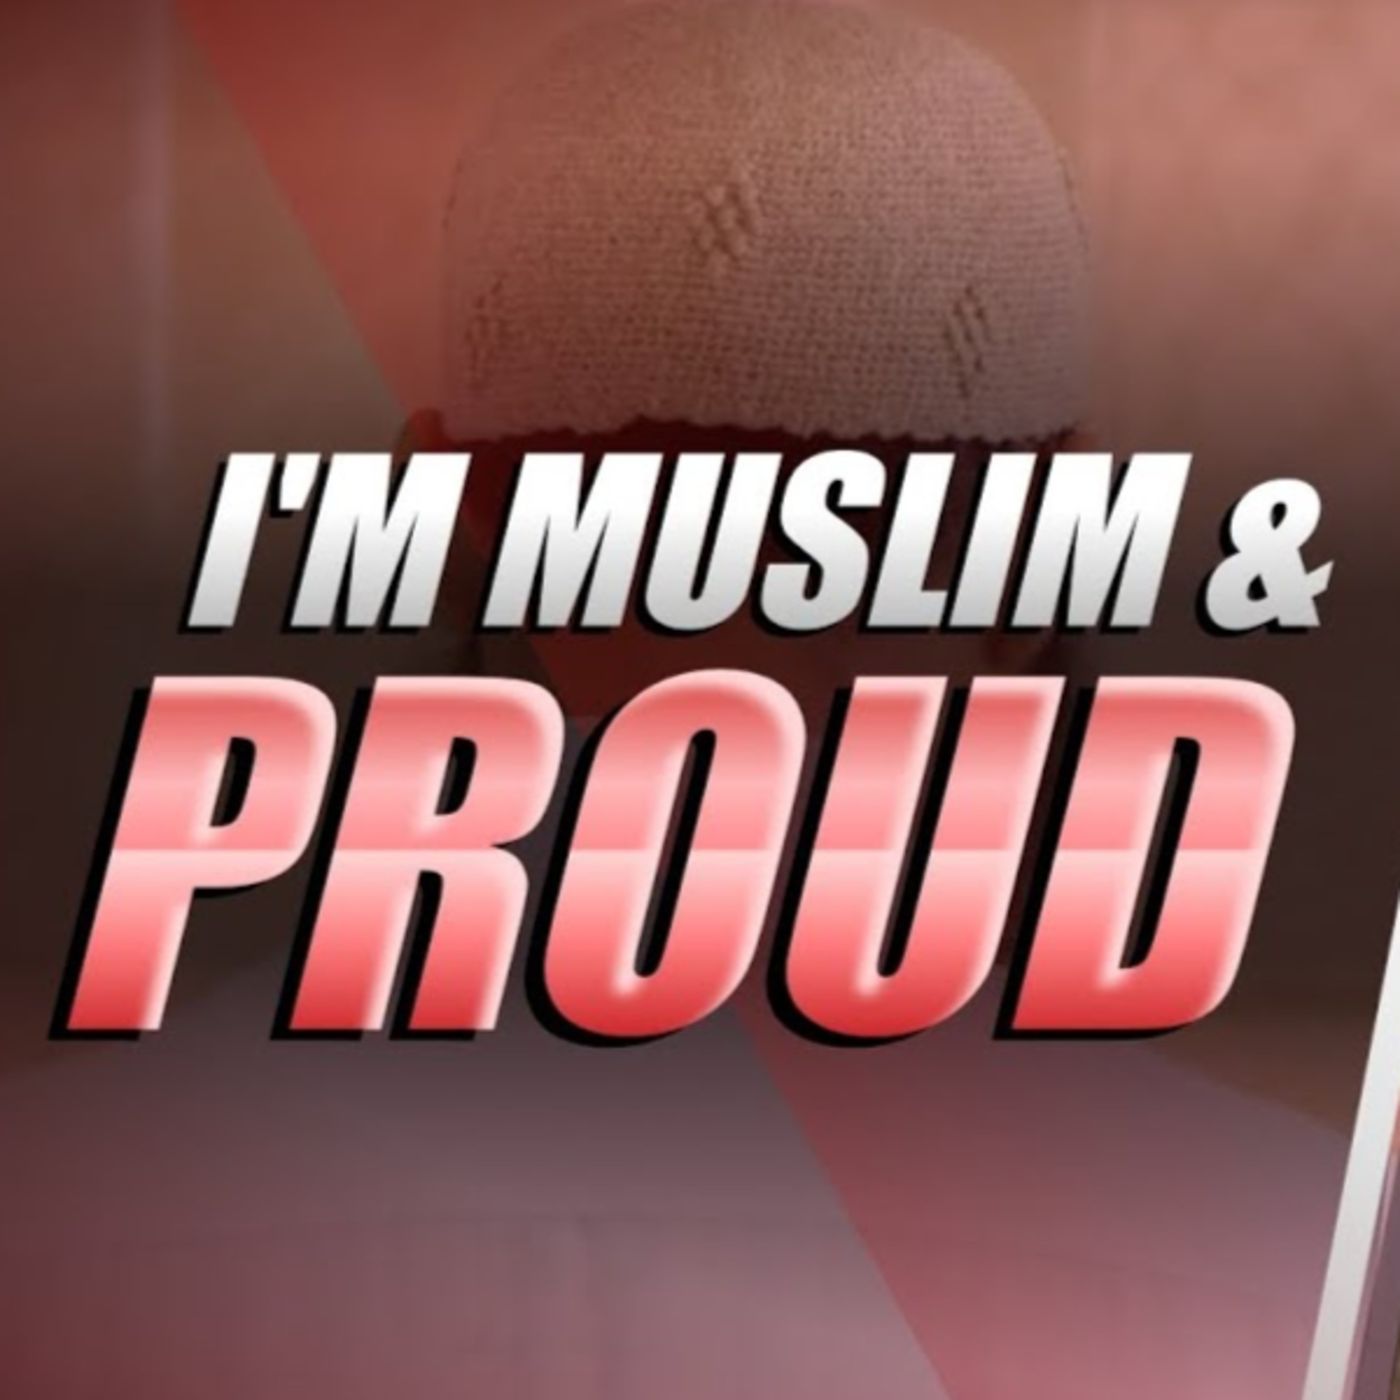 I'm Muslim & Proud!